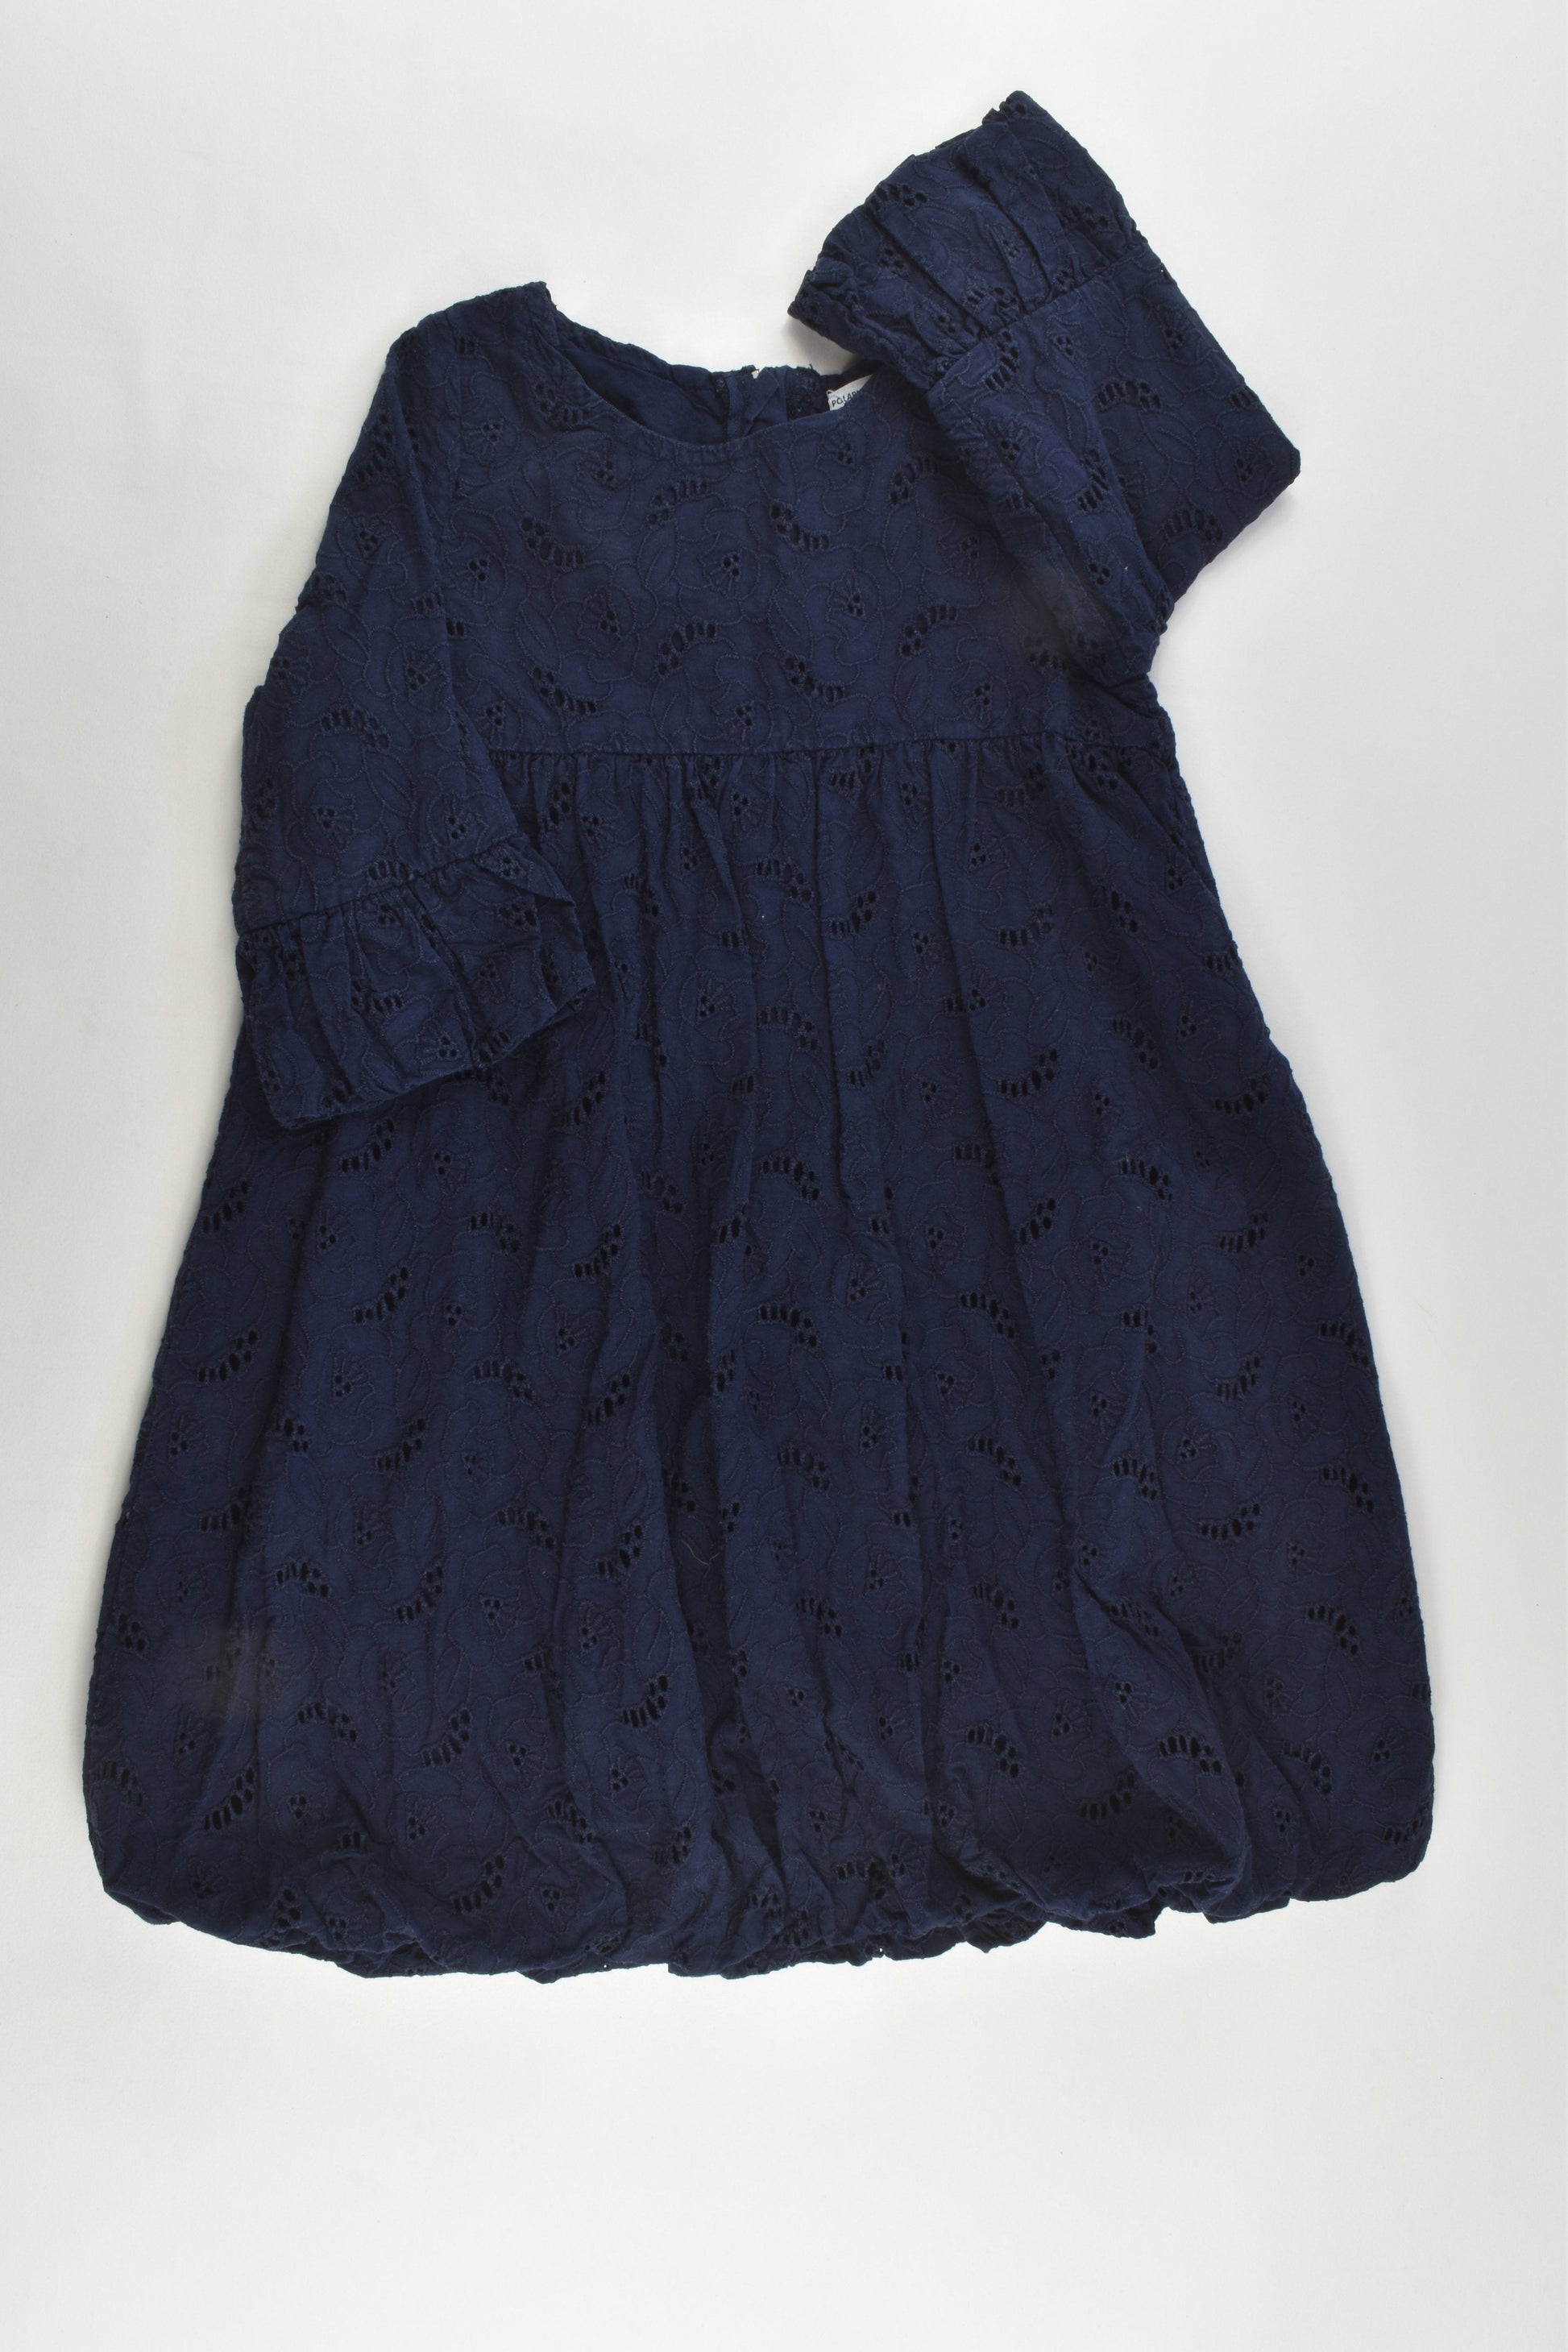 Polarn O. Pyret Size 3-4 (104 cm) Lined Lace Dress